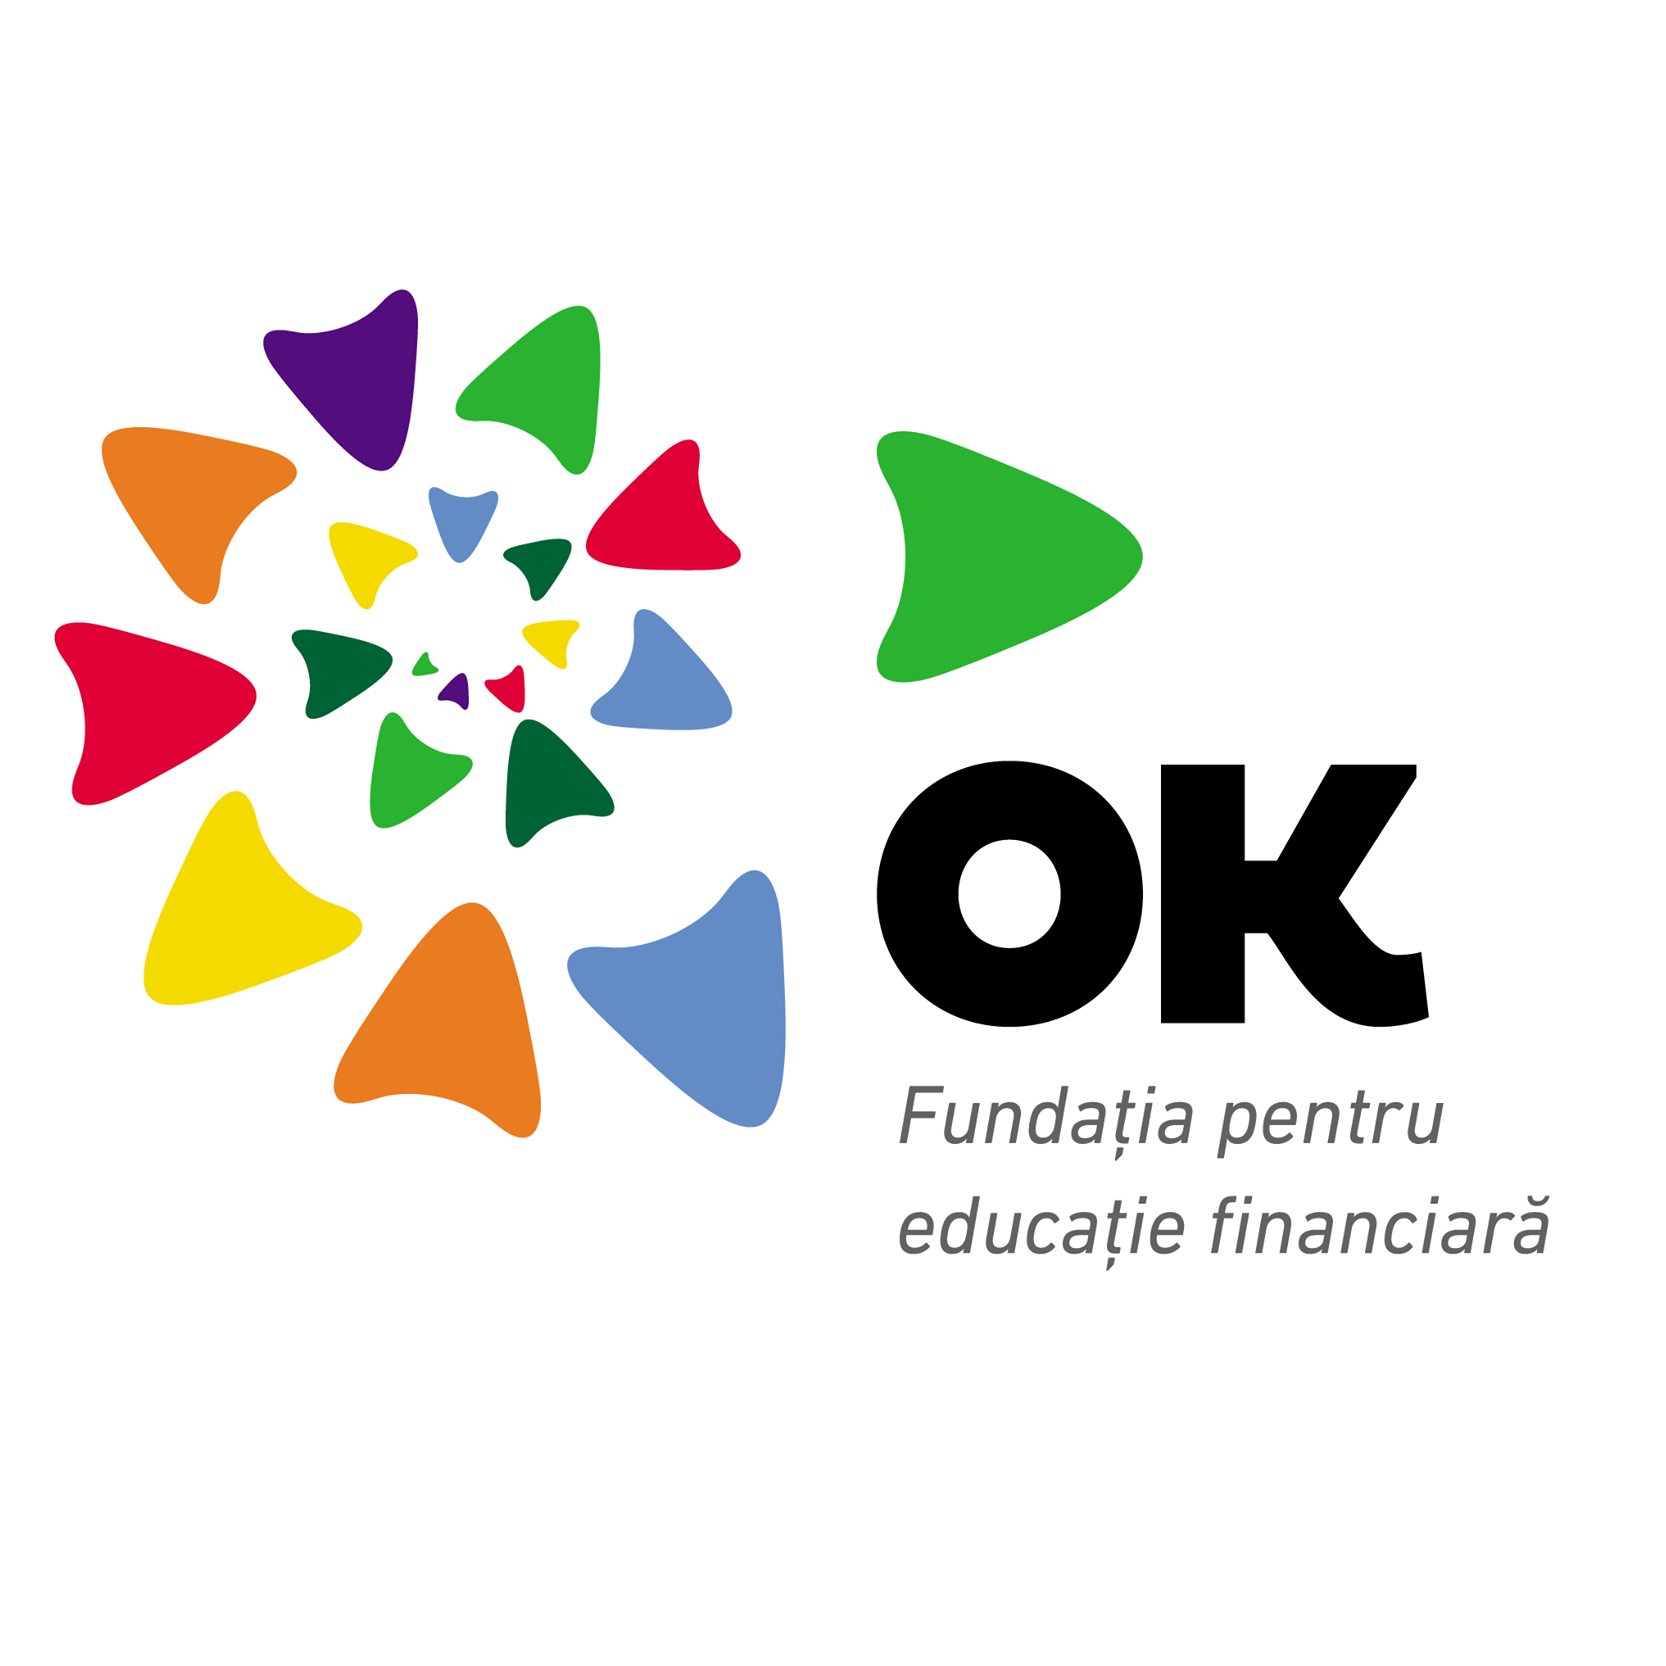 Financial Education Foundation 